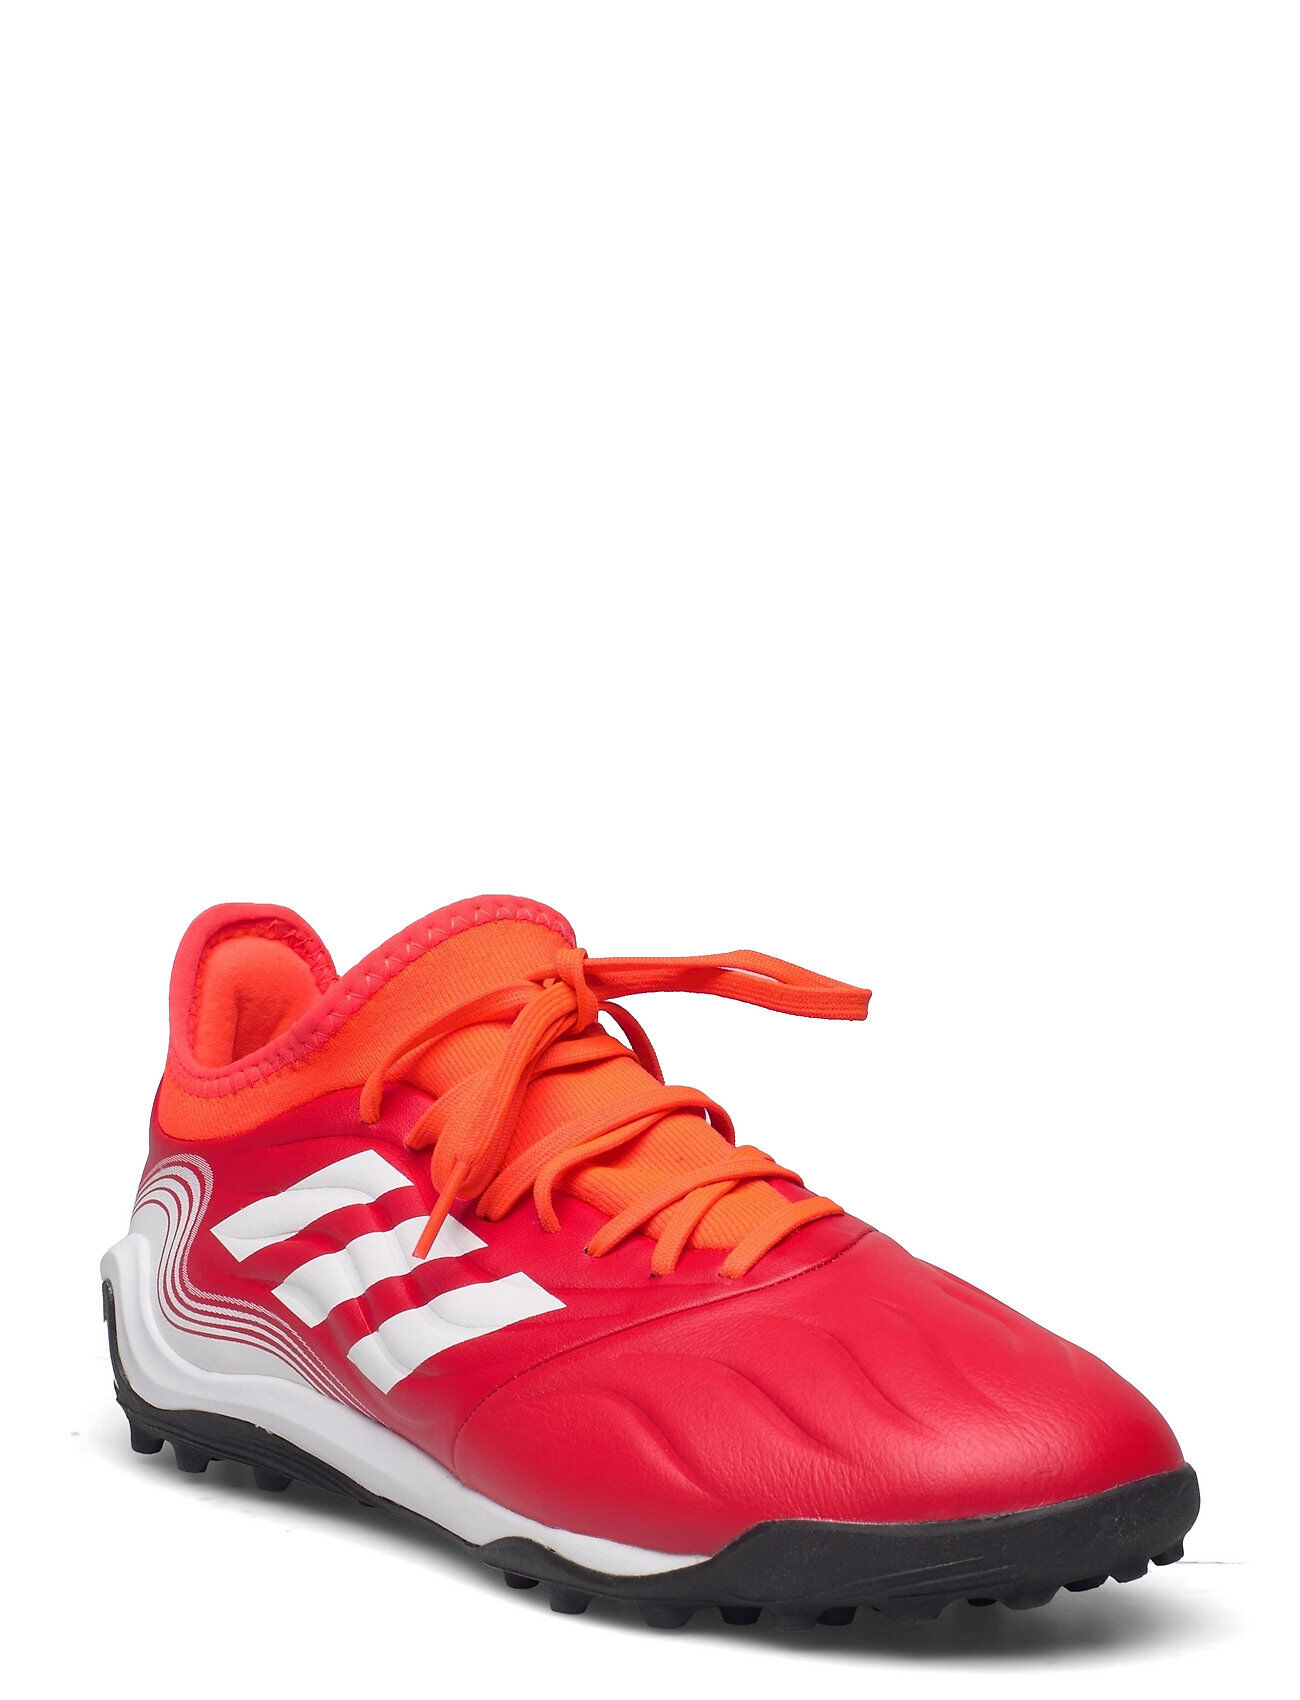 adidas Performance Copa Sense.3 Turf Boots Q3Q4 21 Shoes Sport Shoes Football Boots Rød Adidas Performance